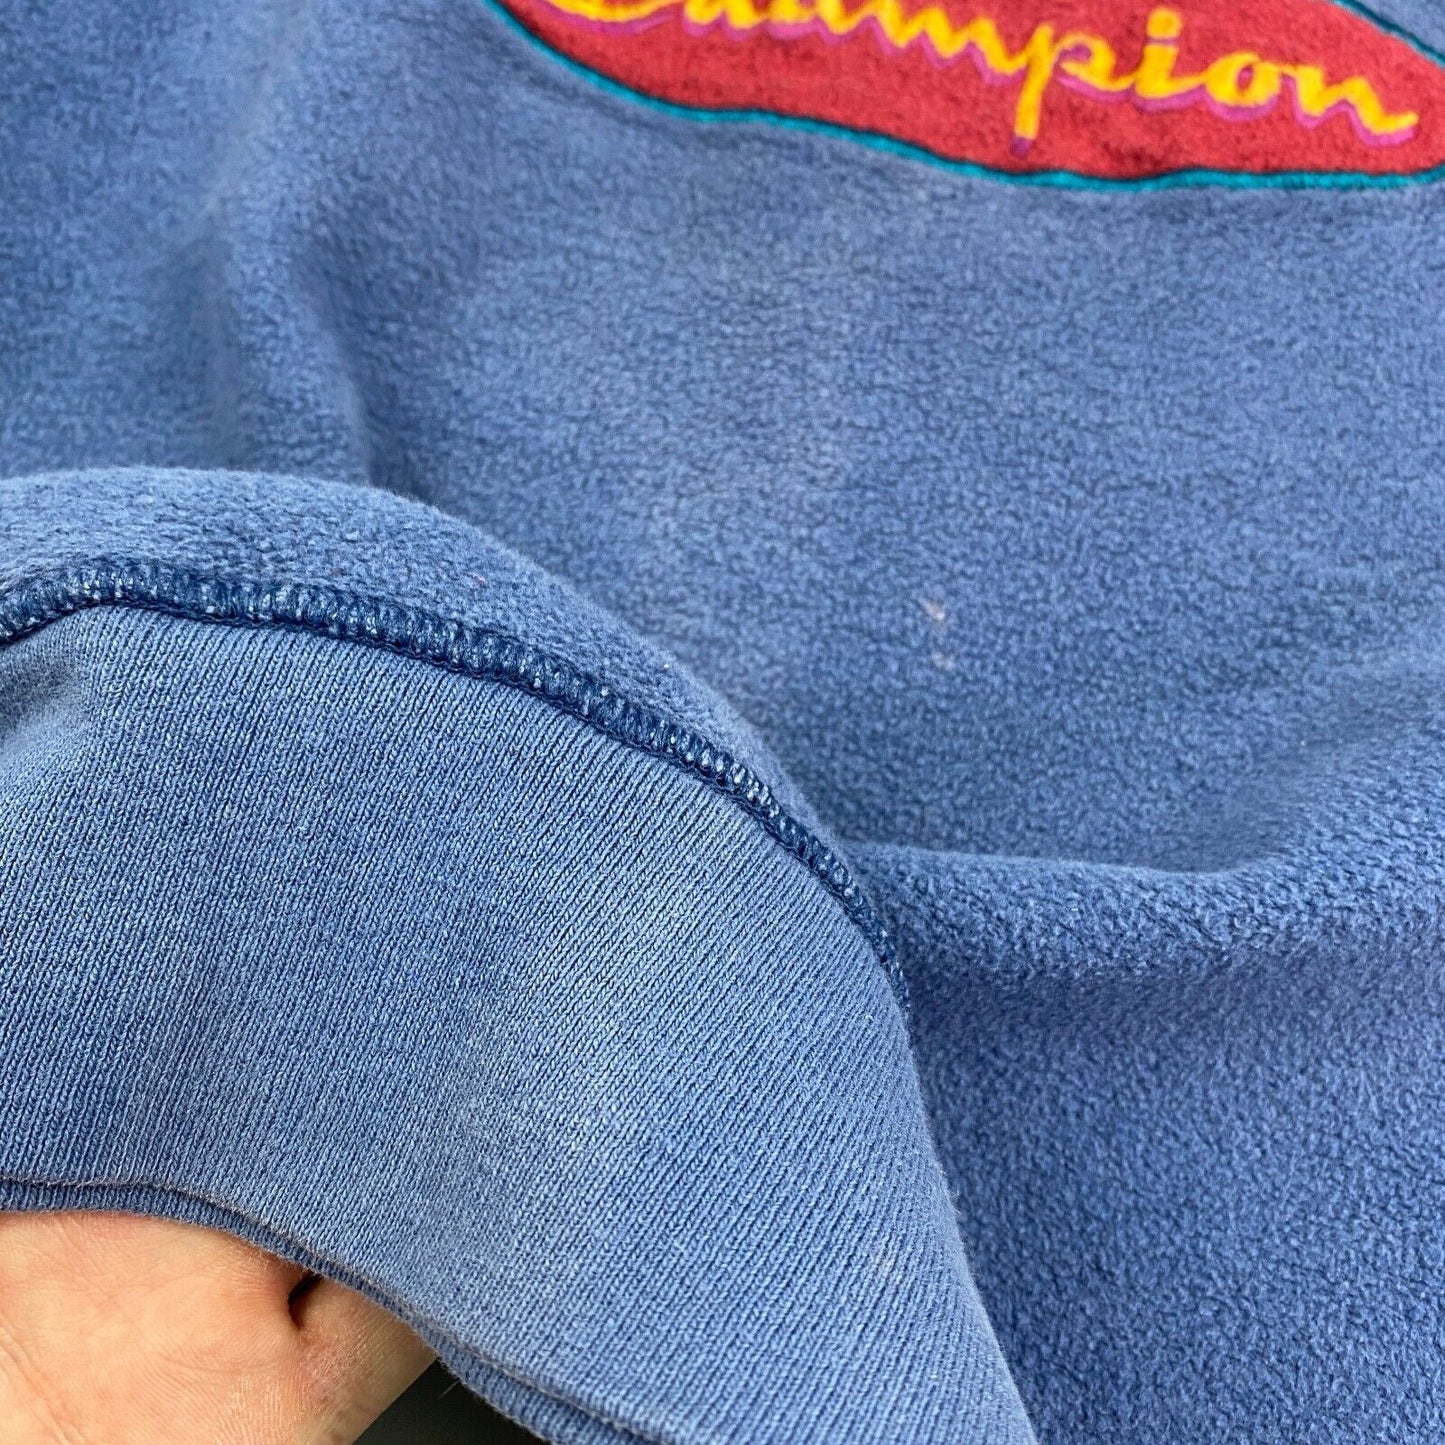 VINTAGE Champion Embroidered Logo Blue Crewneck Sweater sz Medium Men